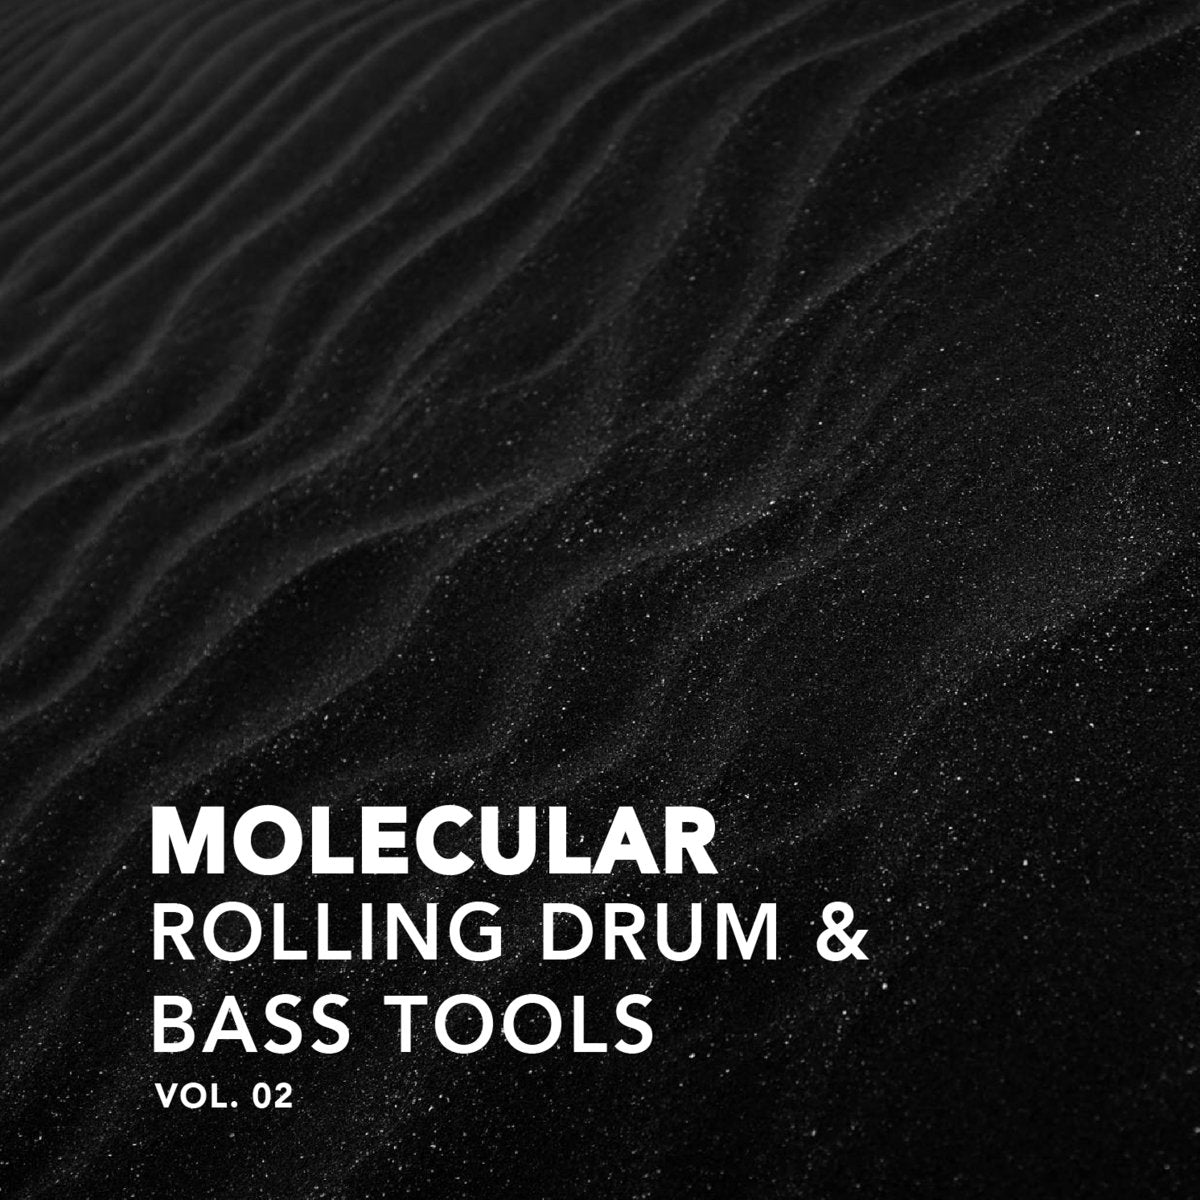 Rolling Drum & Bass Tools Vol. 02